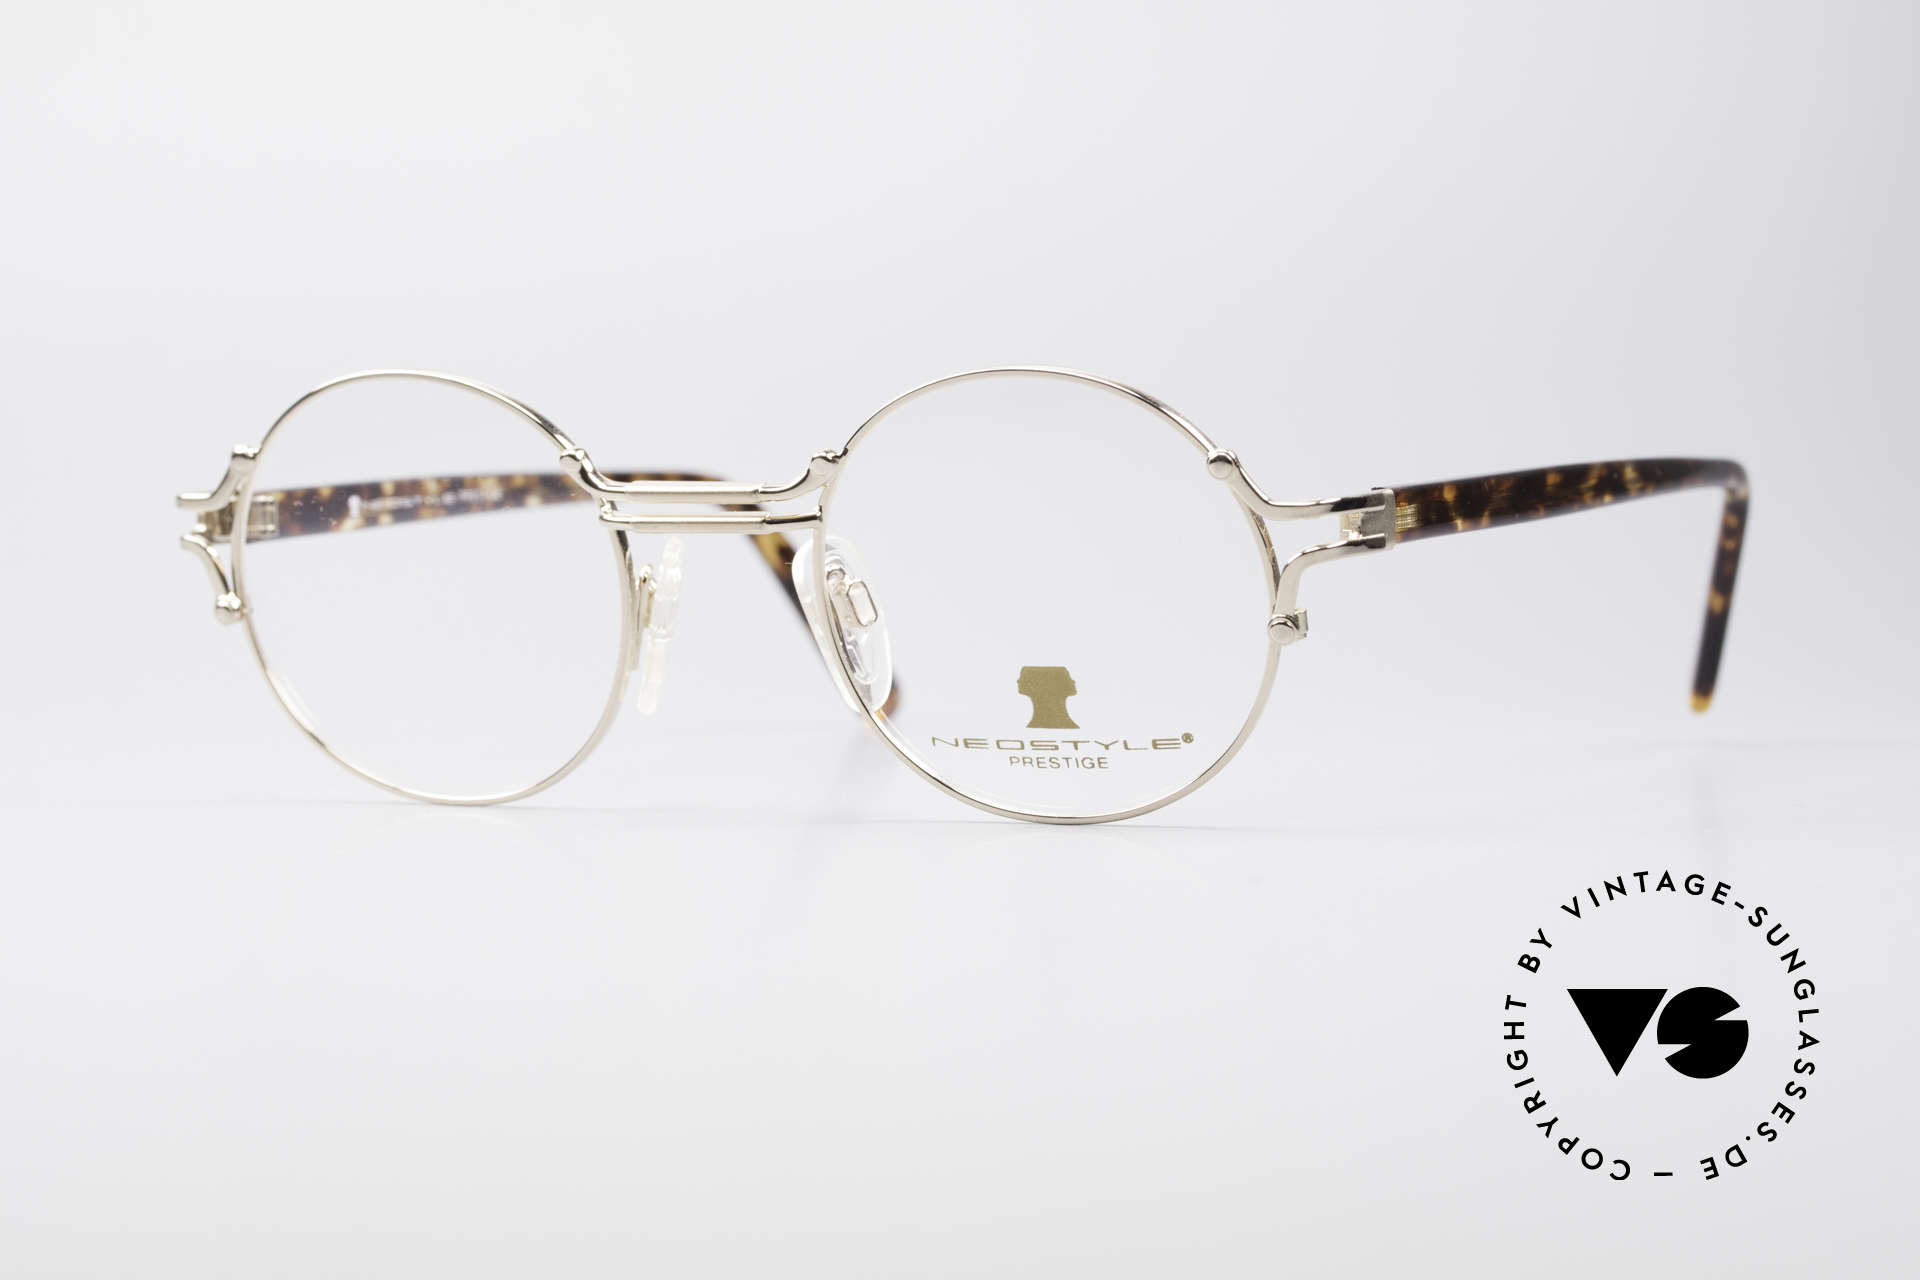 Neostyle Academic 8 Round Vintage Eyeglasses, Neostlye Academic 8 Prestige vintage glasses, Made for Men and Women